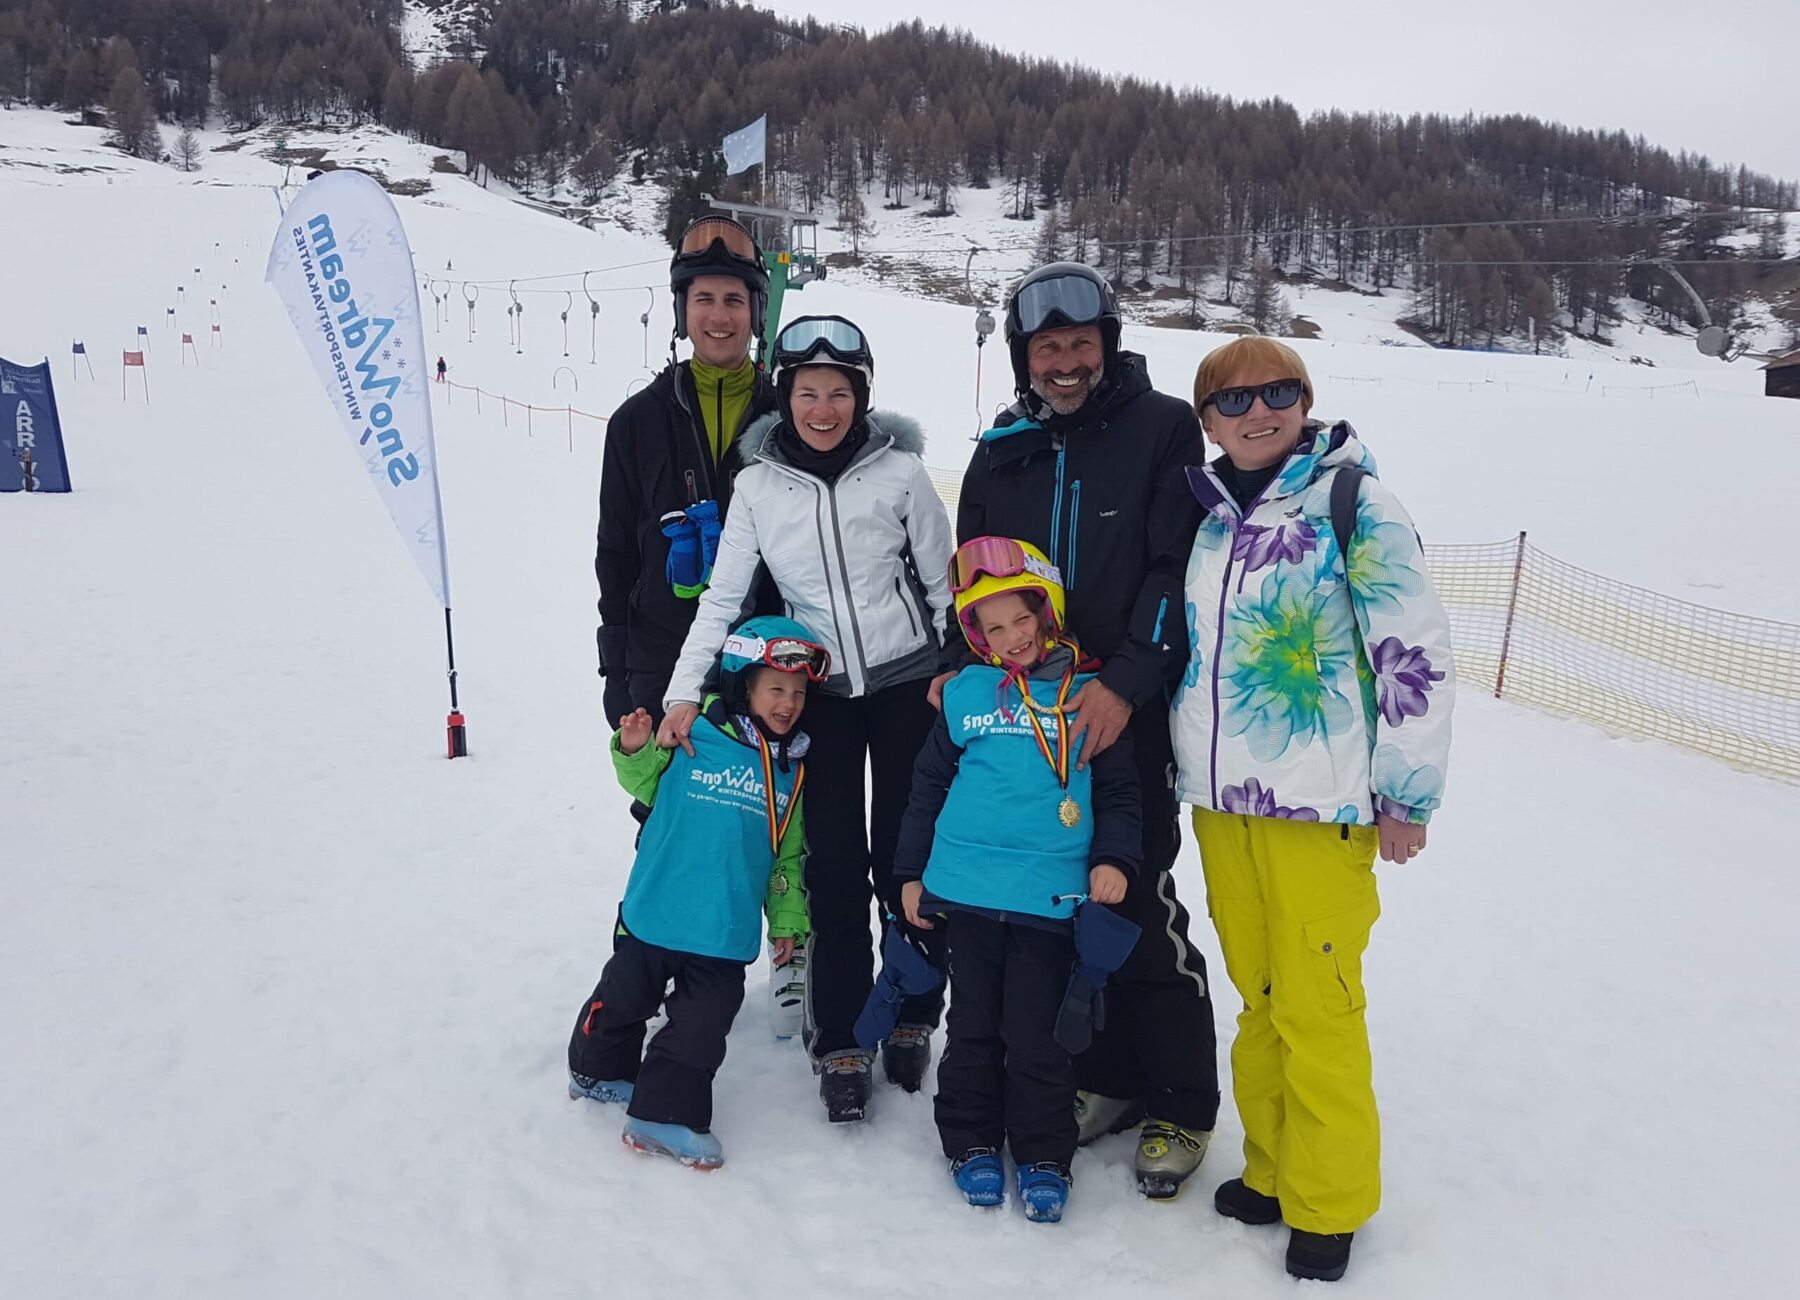 gezin na de slalom wedstrijd